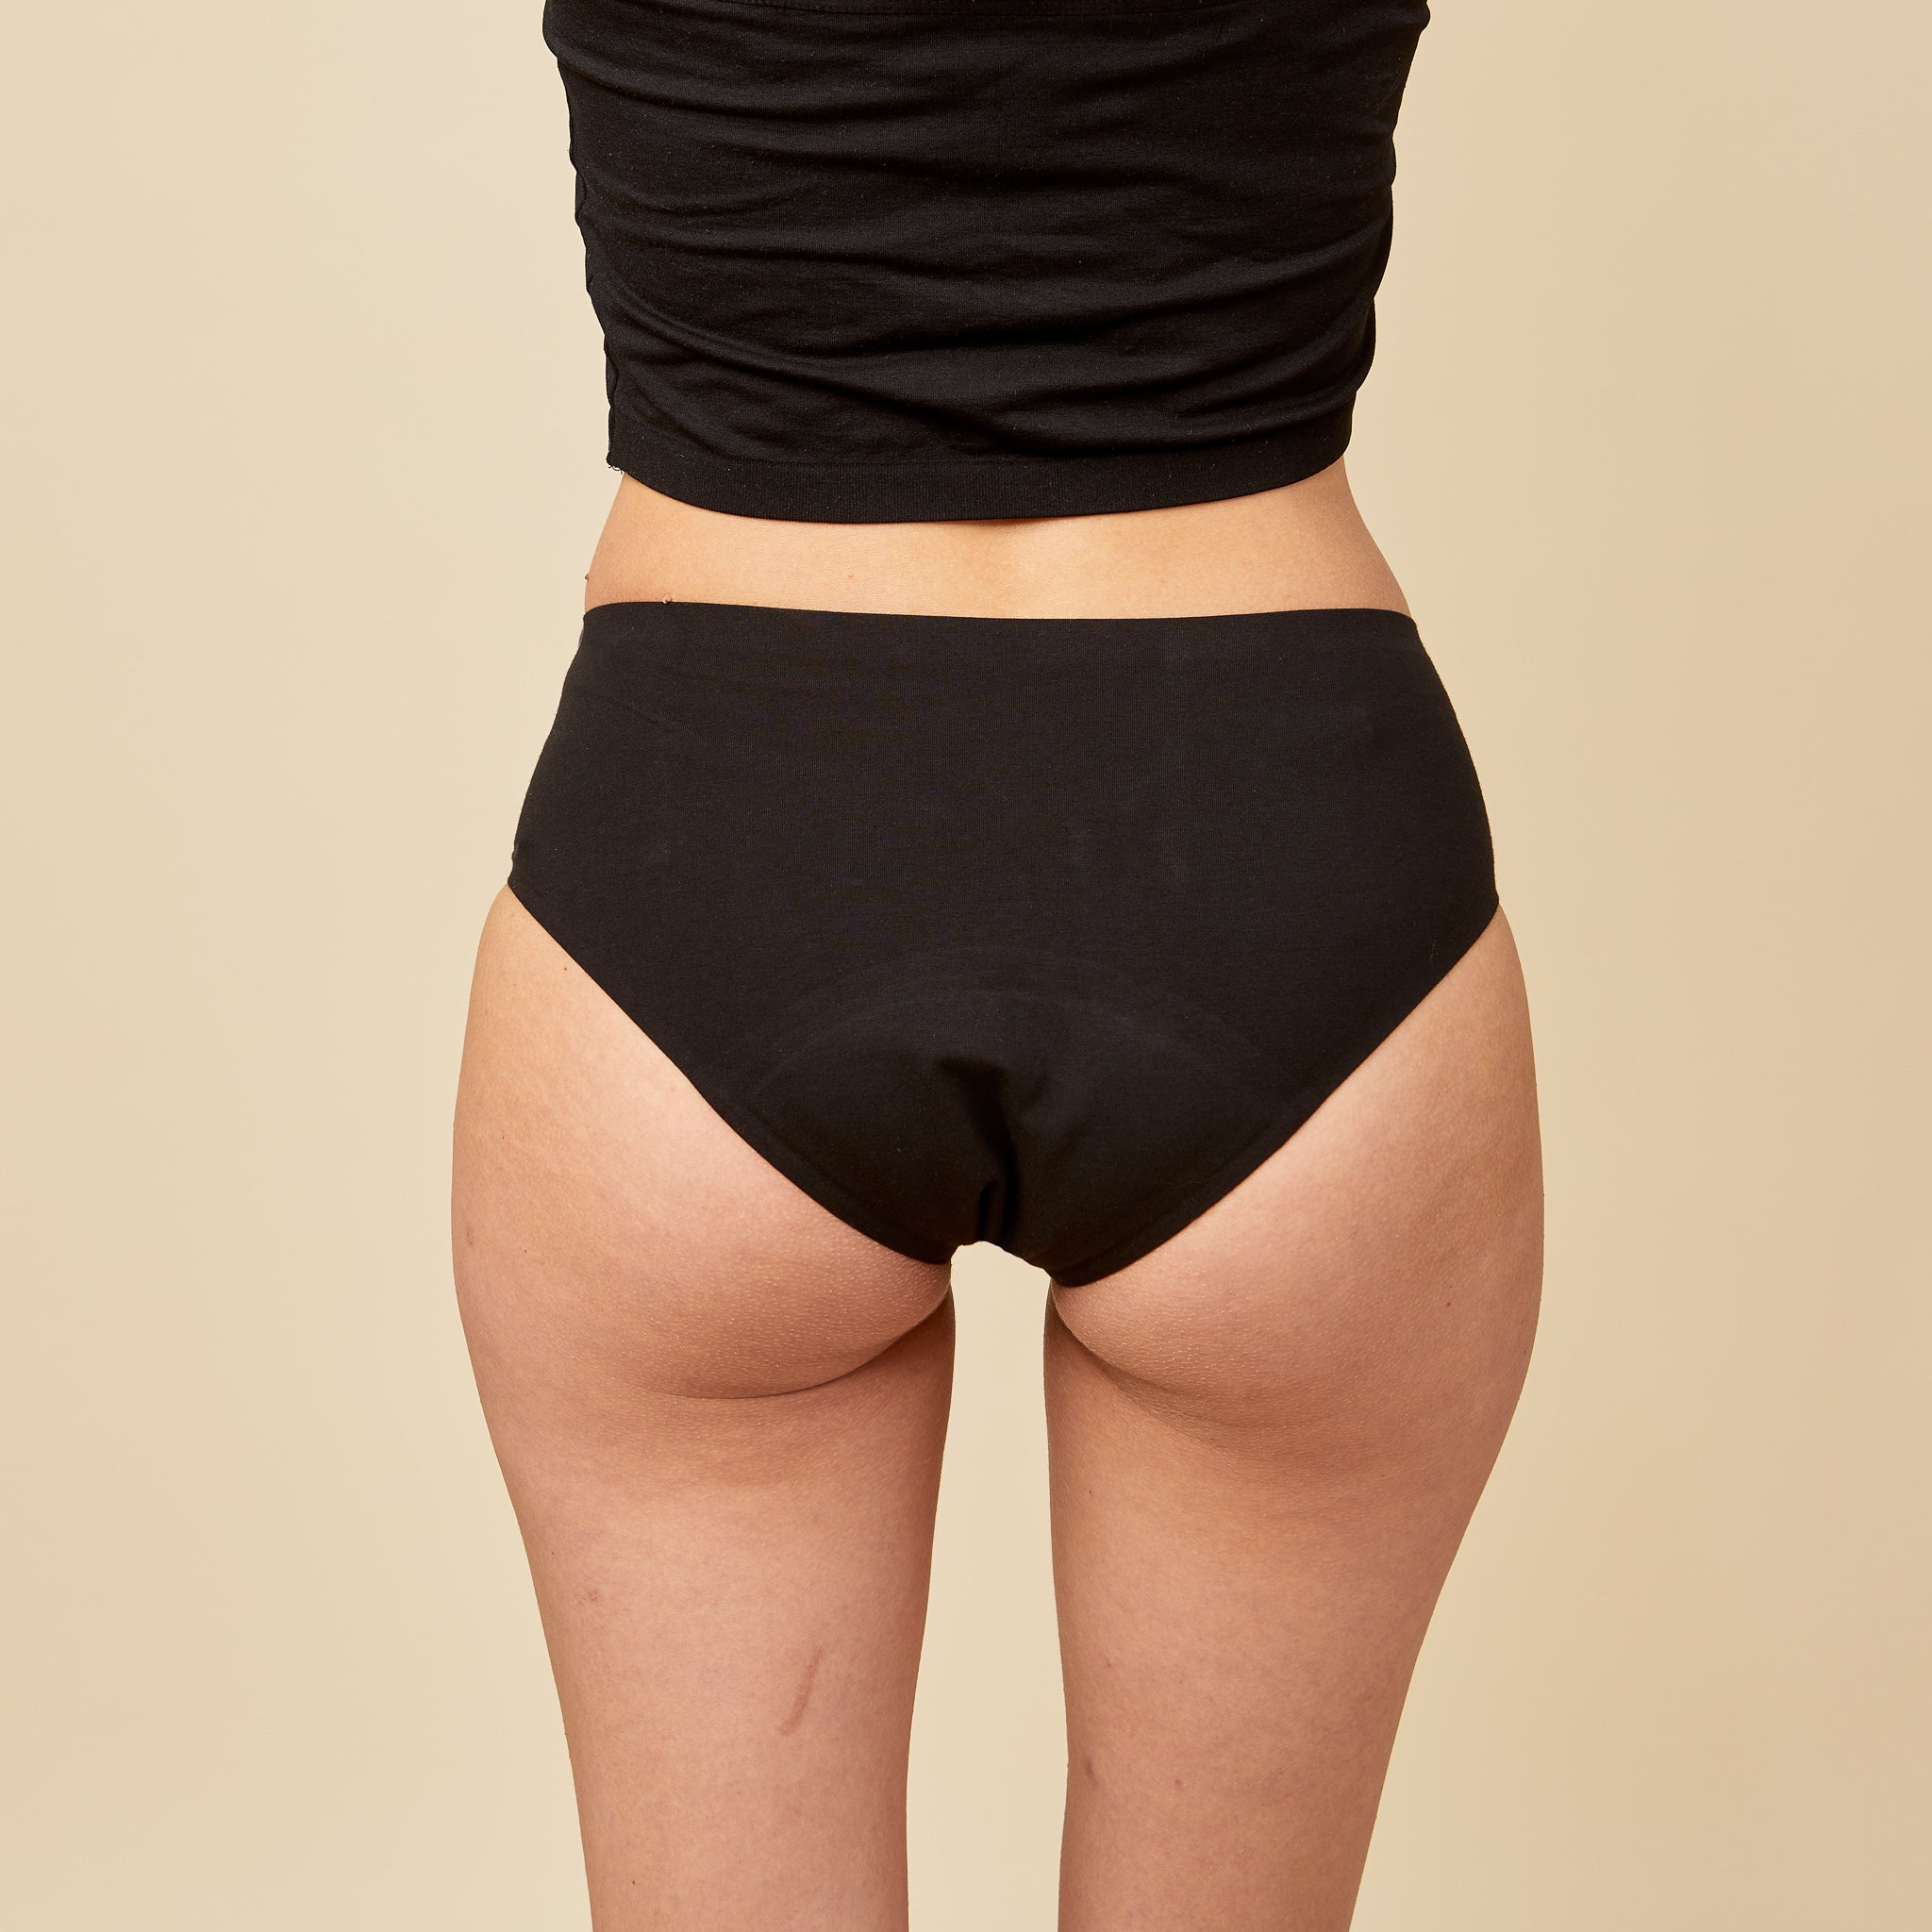 Period. By The Period Company The Bikini Leak-Proof Period Underwear for  Women, L Black : : Health & Personal Care